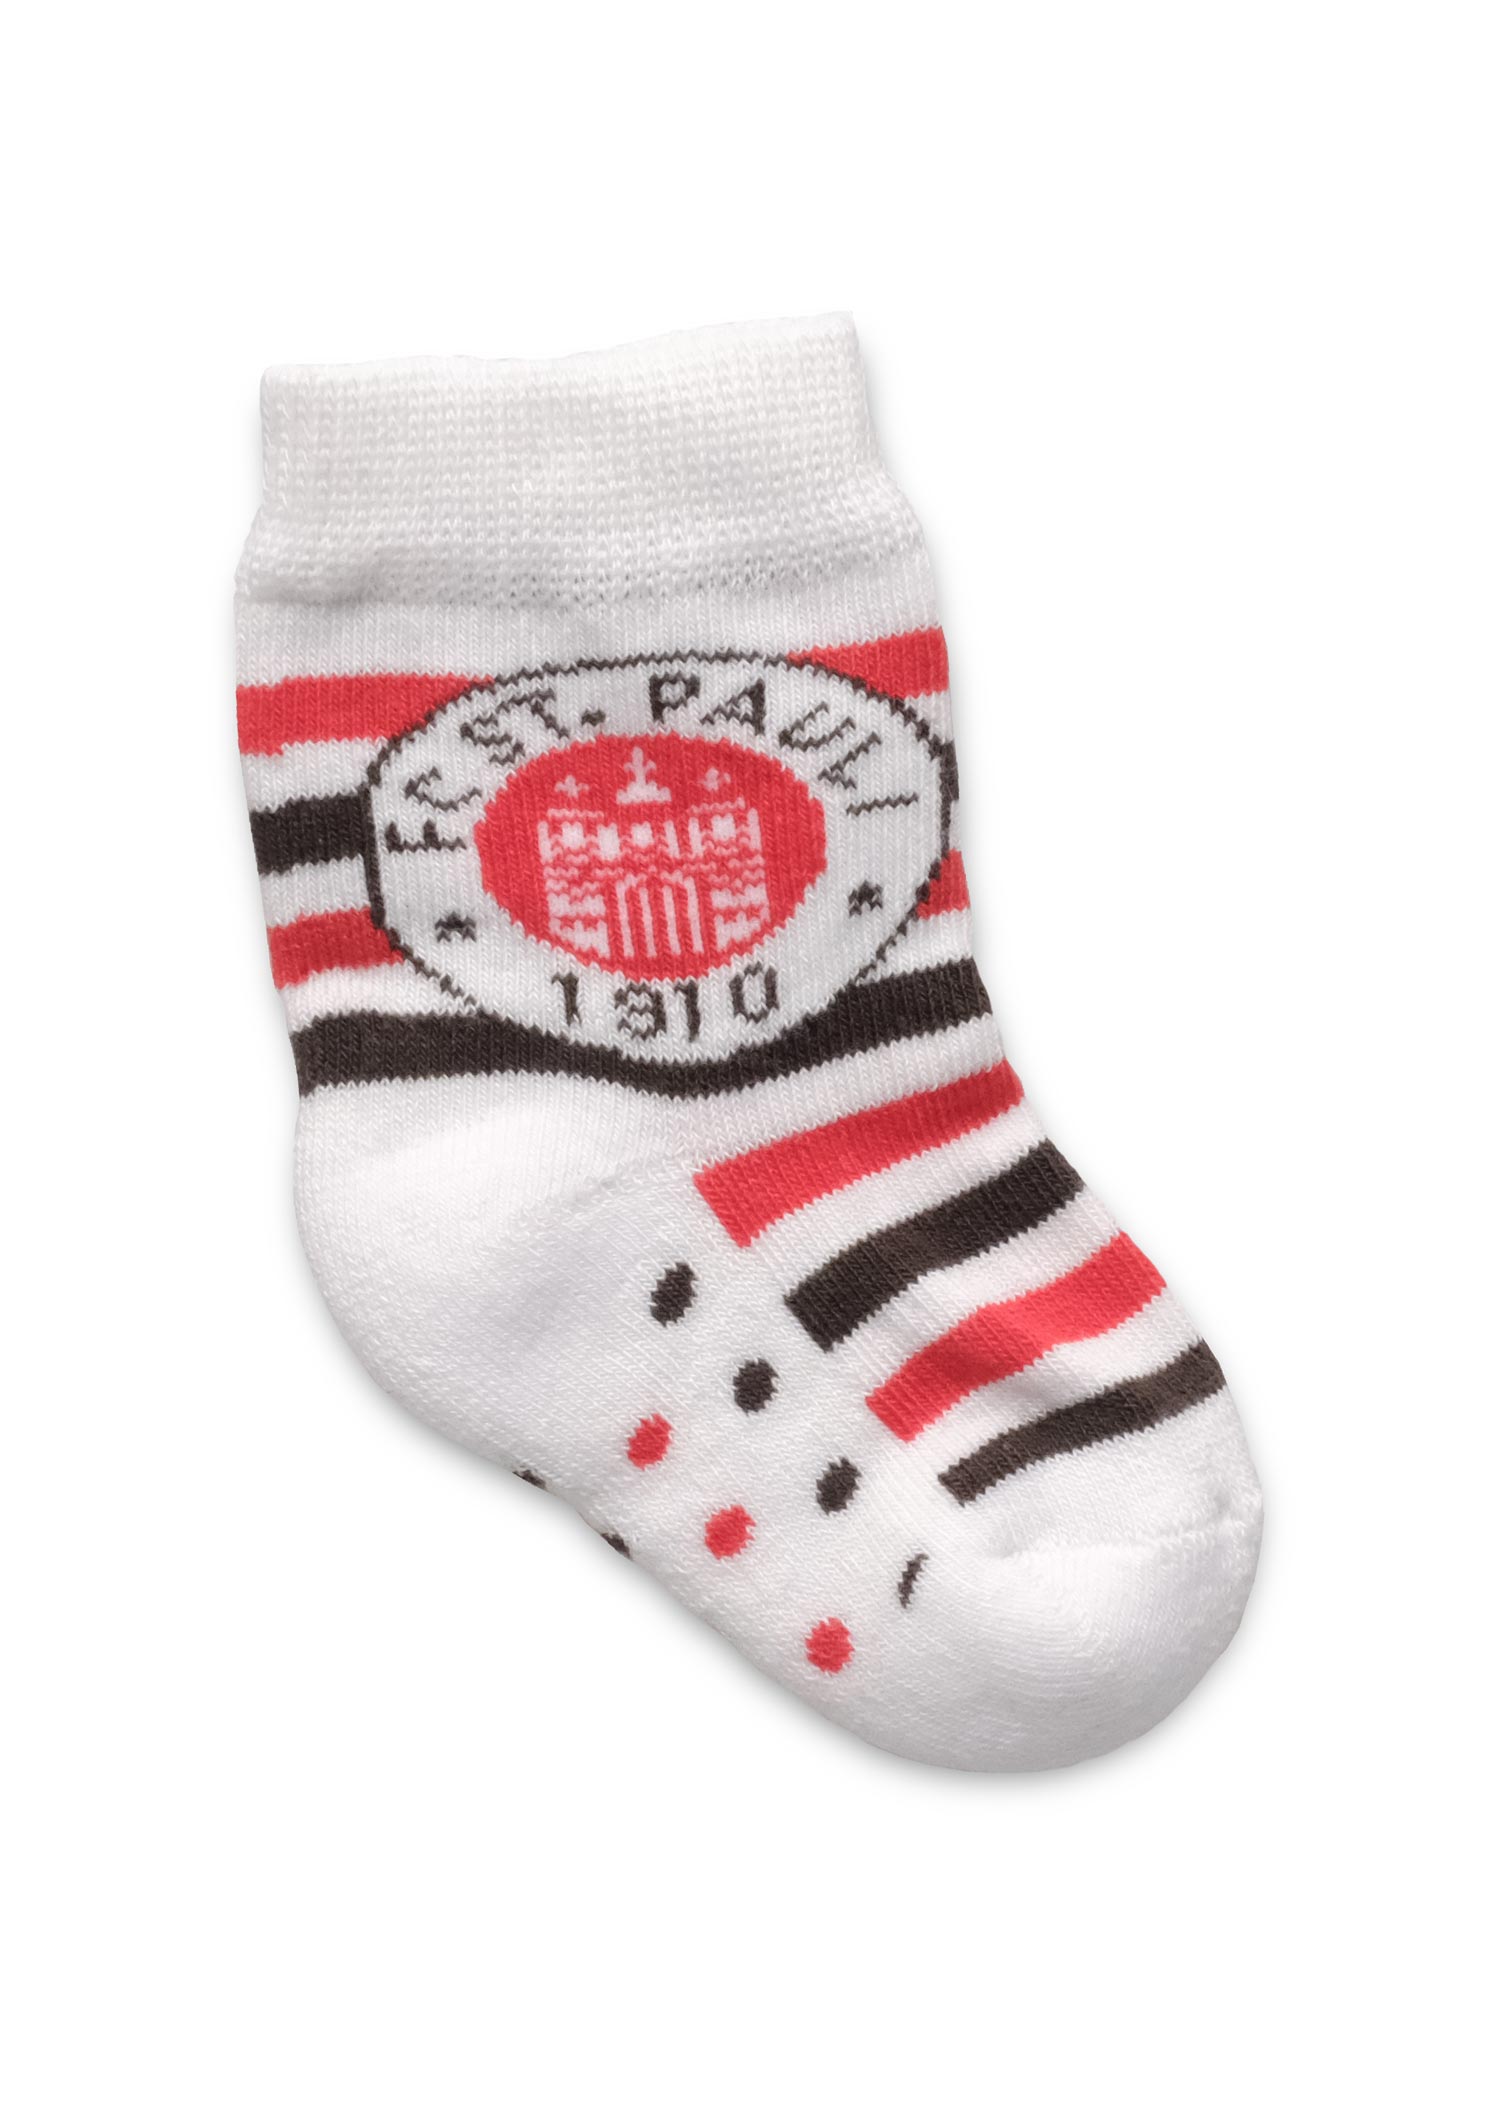 Baby socks logo brown-white-red striped